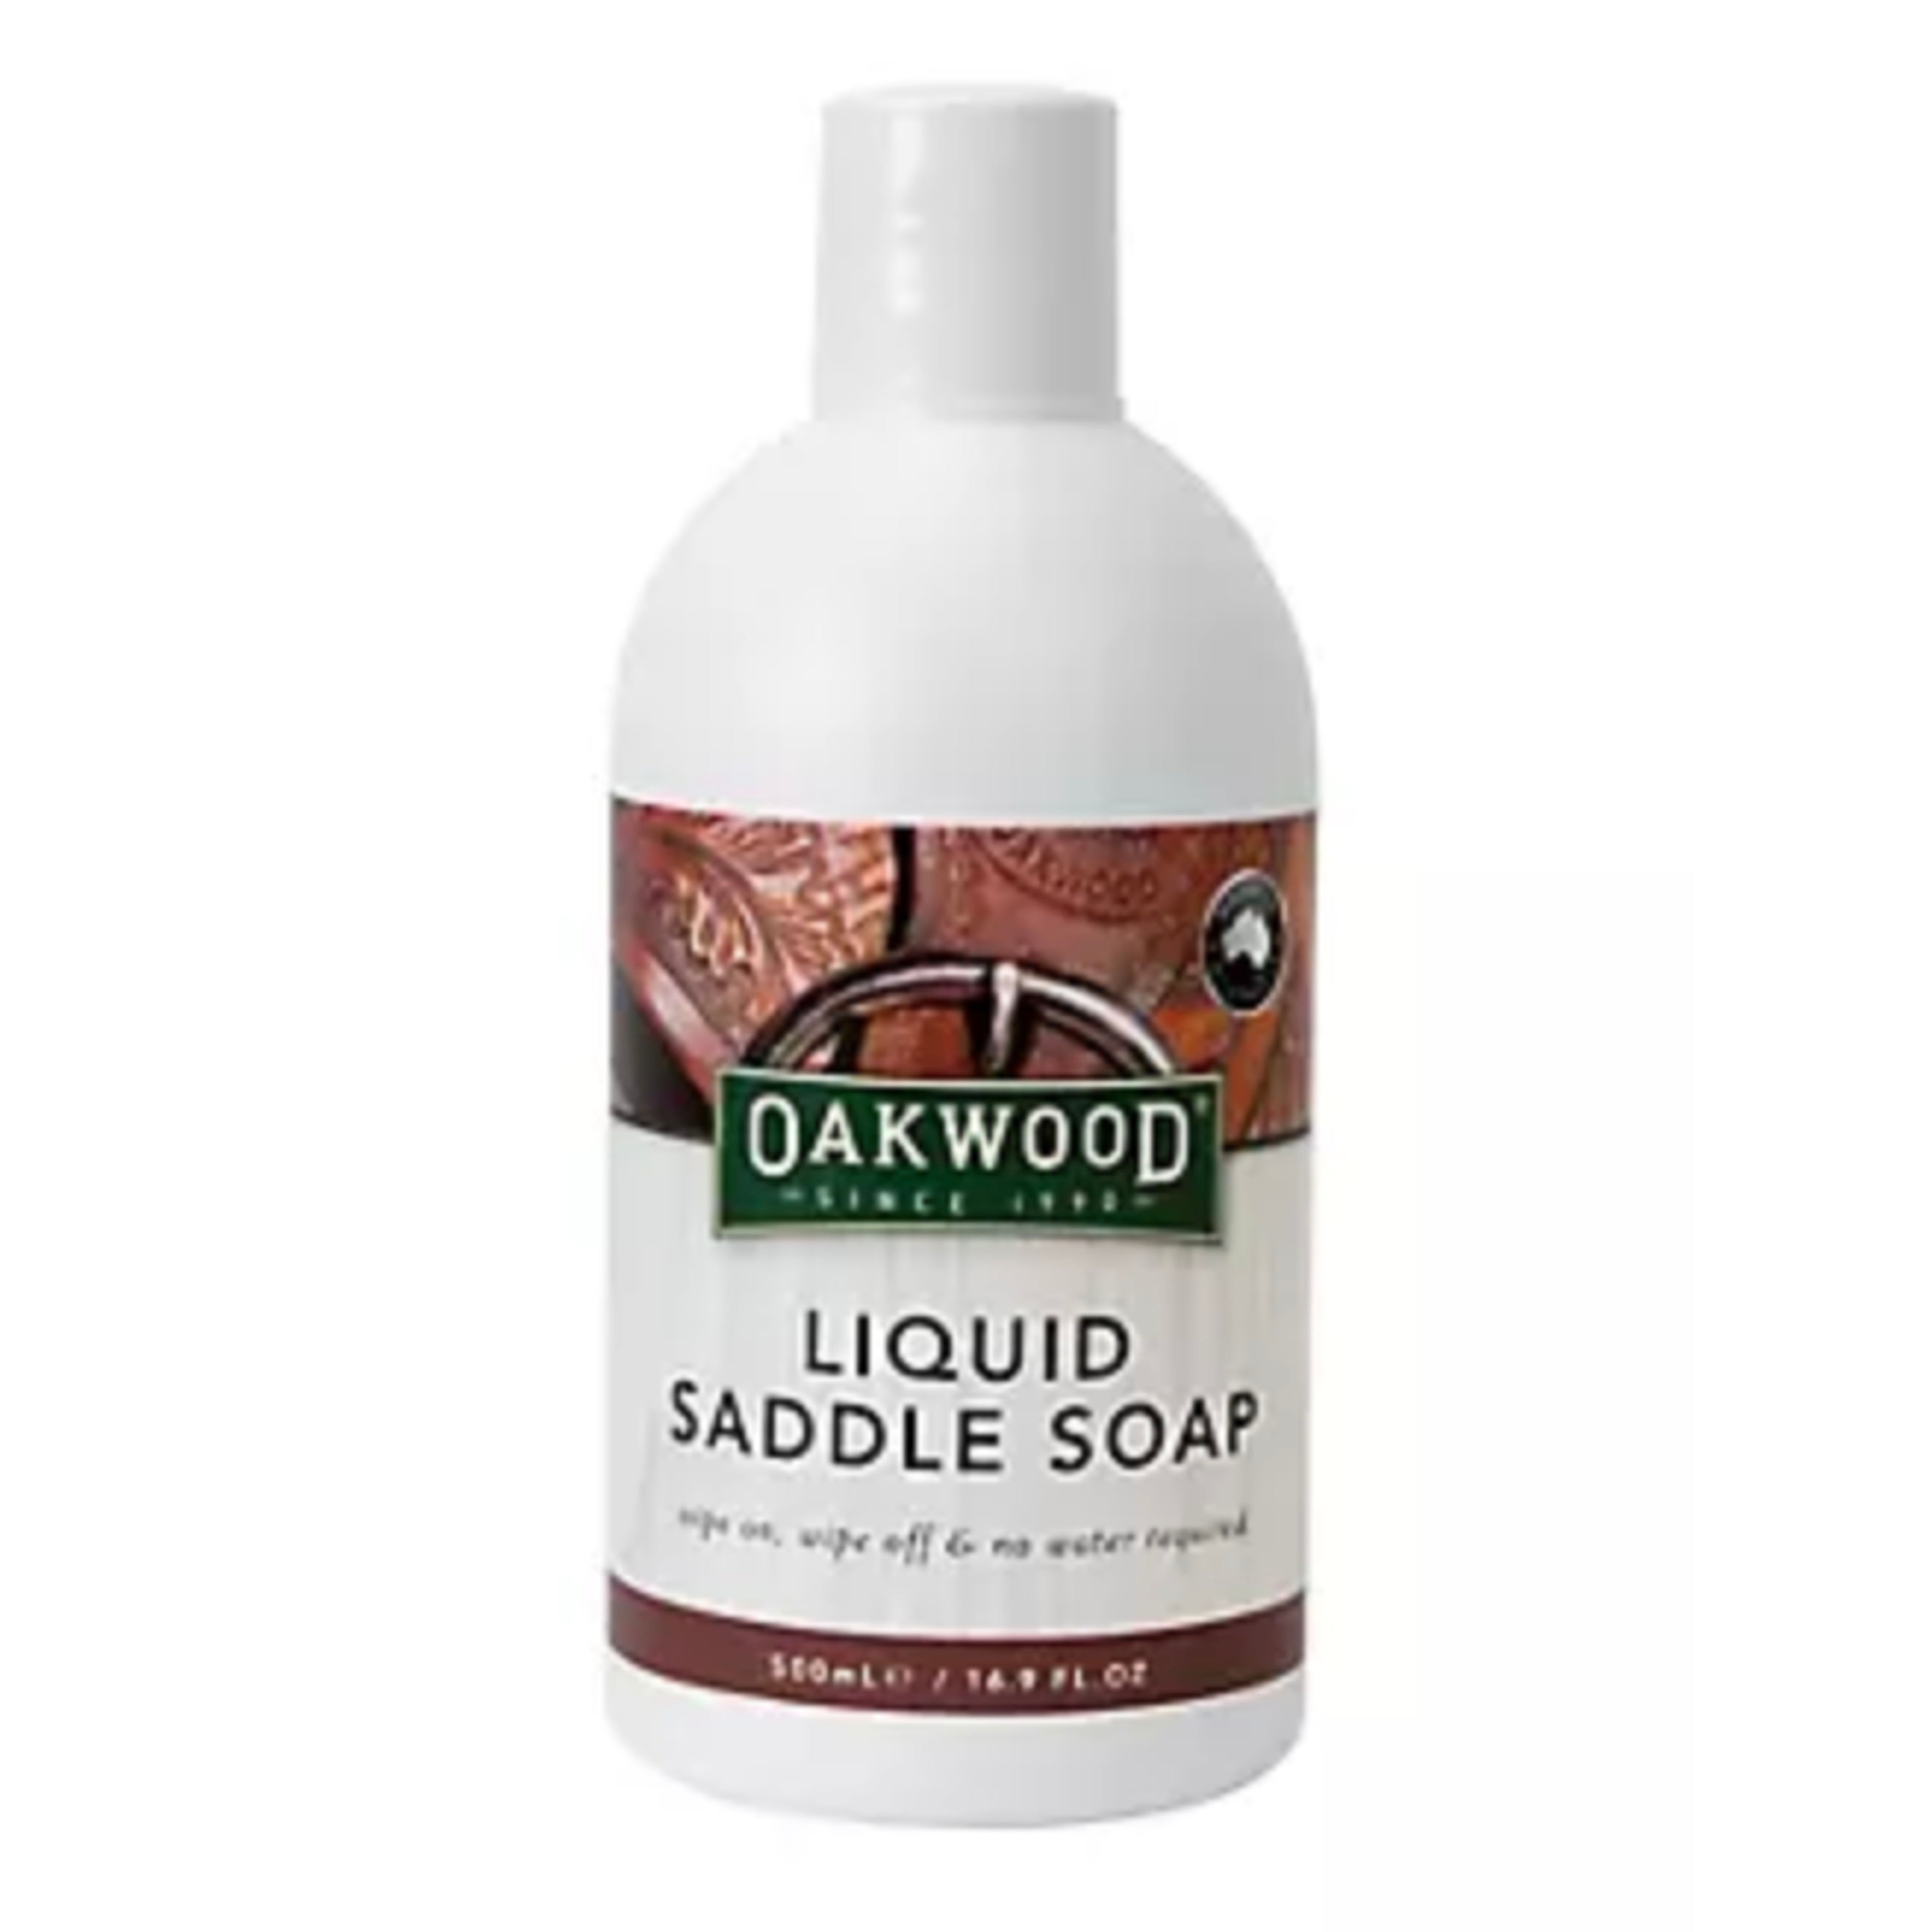 Oakwood Liquid Saddle Soap 16 oz